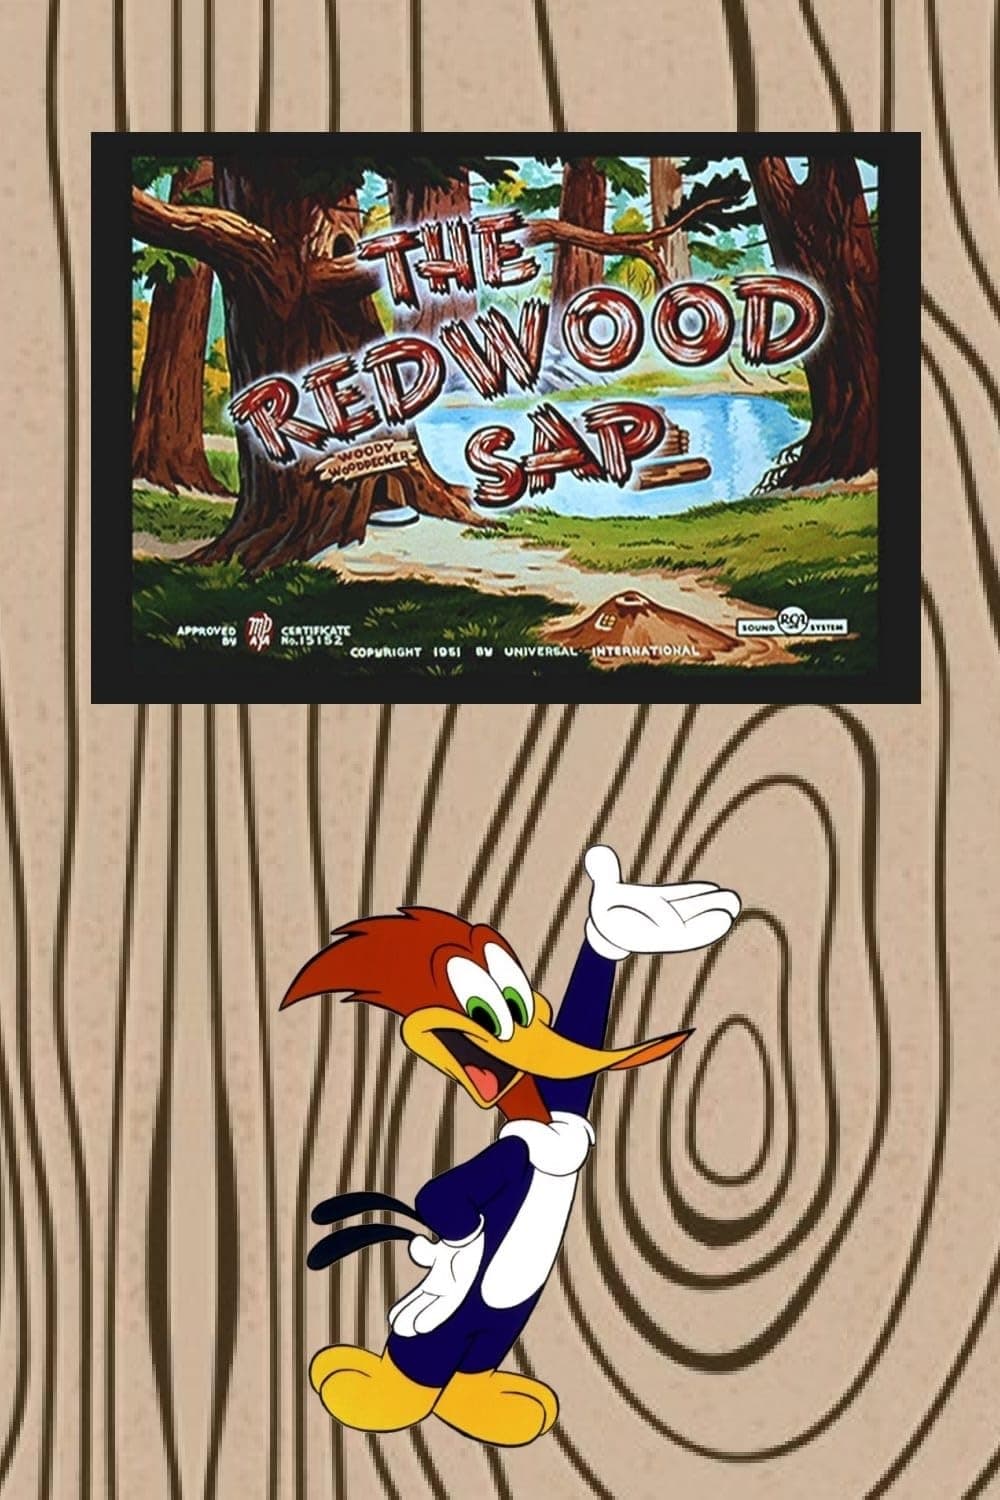 The Redwood Sap